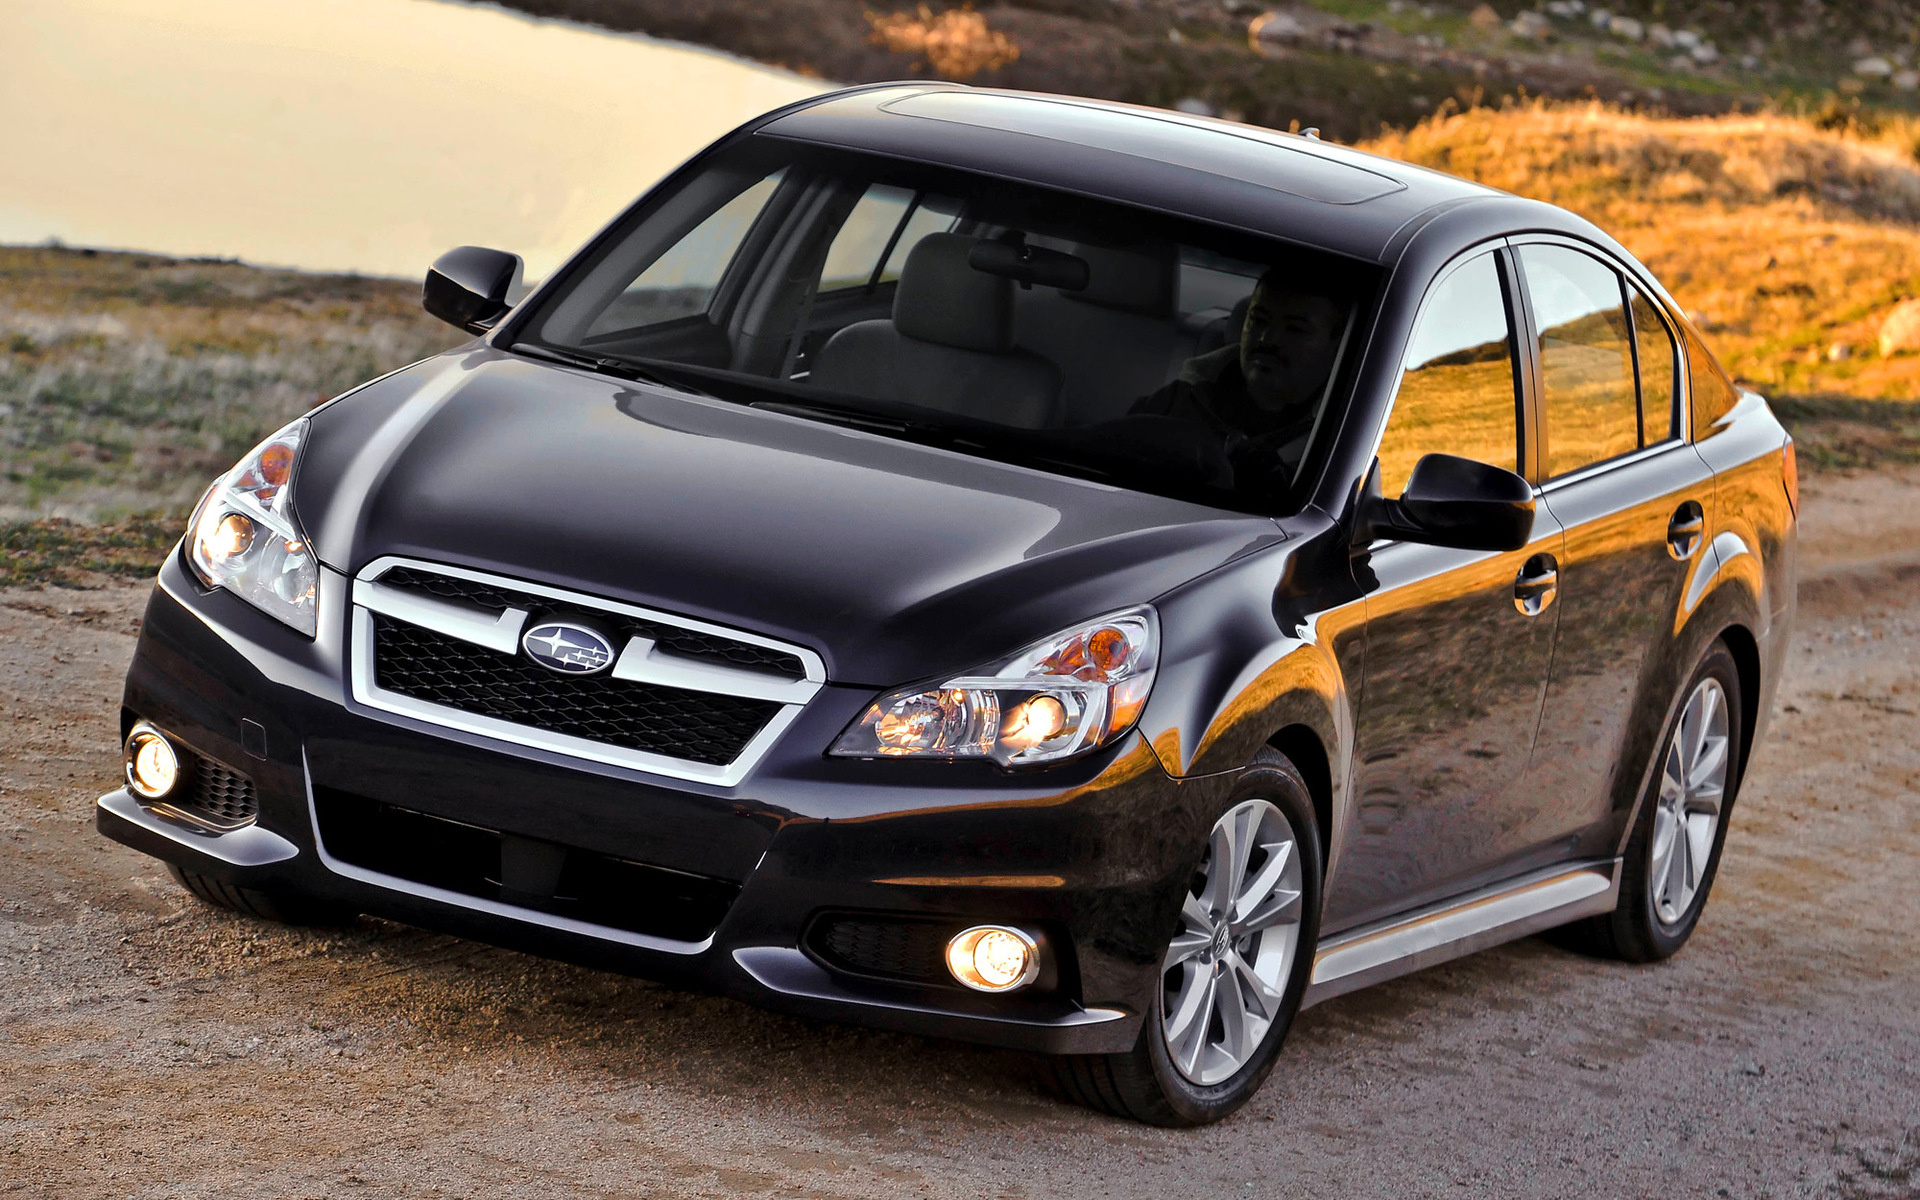 Subaru Legacy, 2012 model beauty, High-definition wallpapers, Car pixel perfection, 1920x1200 HD Desktop